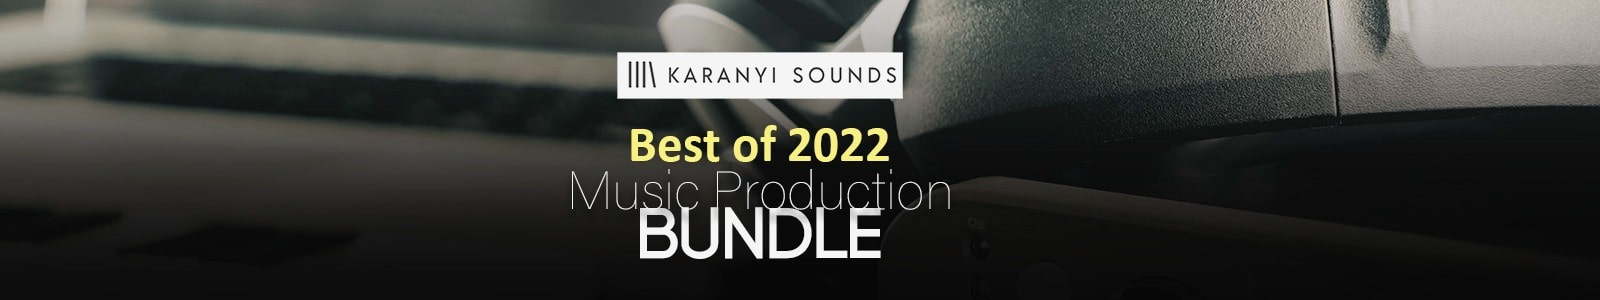 Best of 2022 Music Production Bundle by Karanyi Sounds